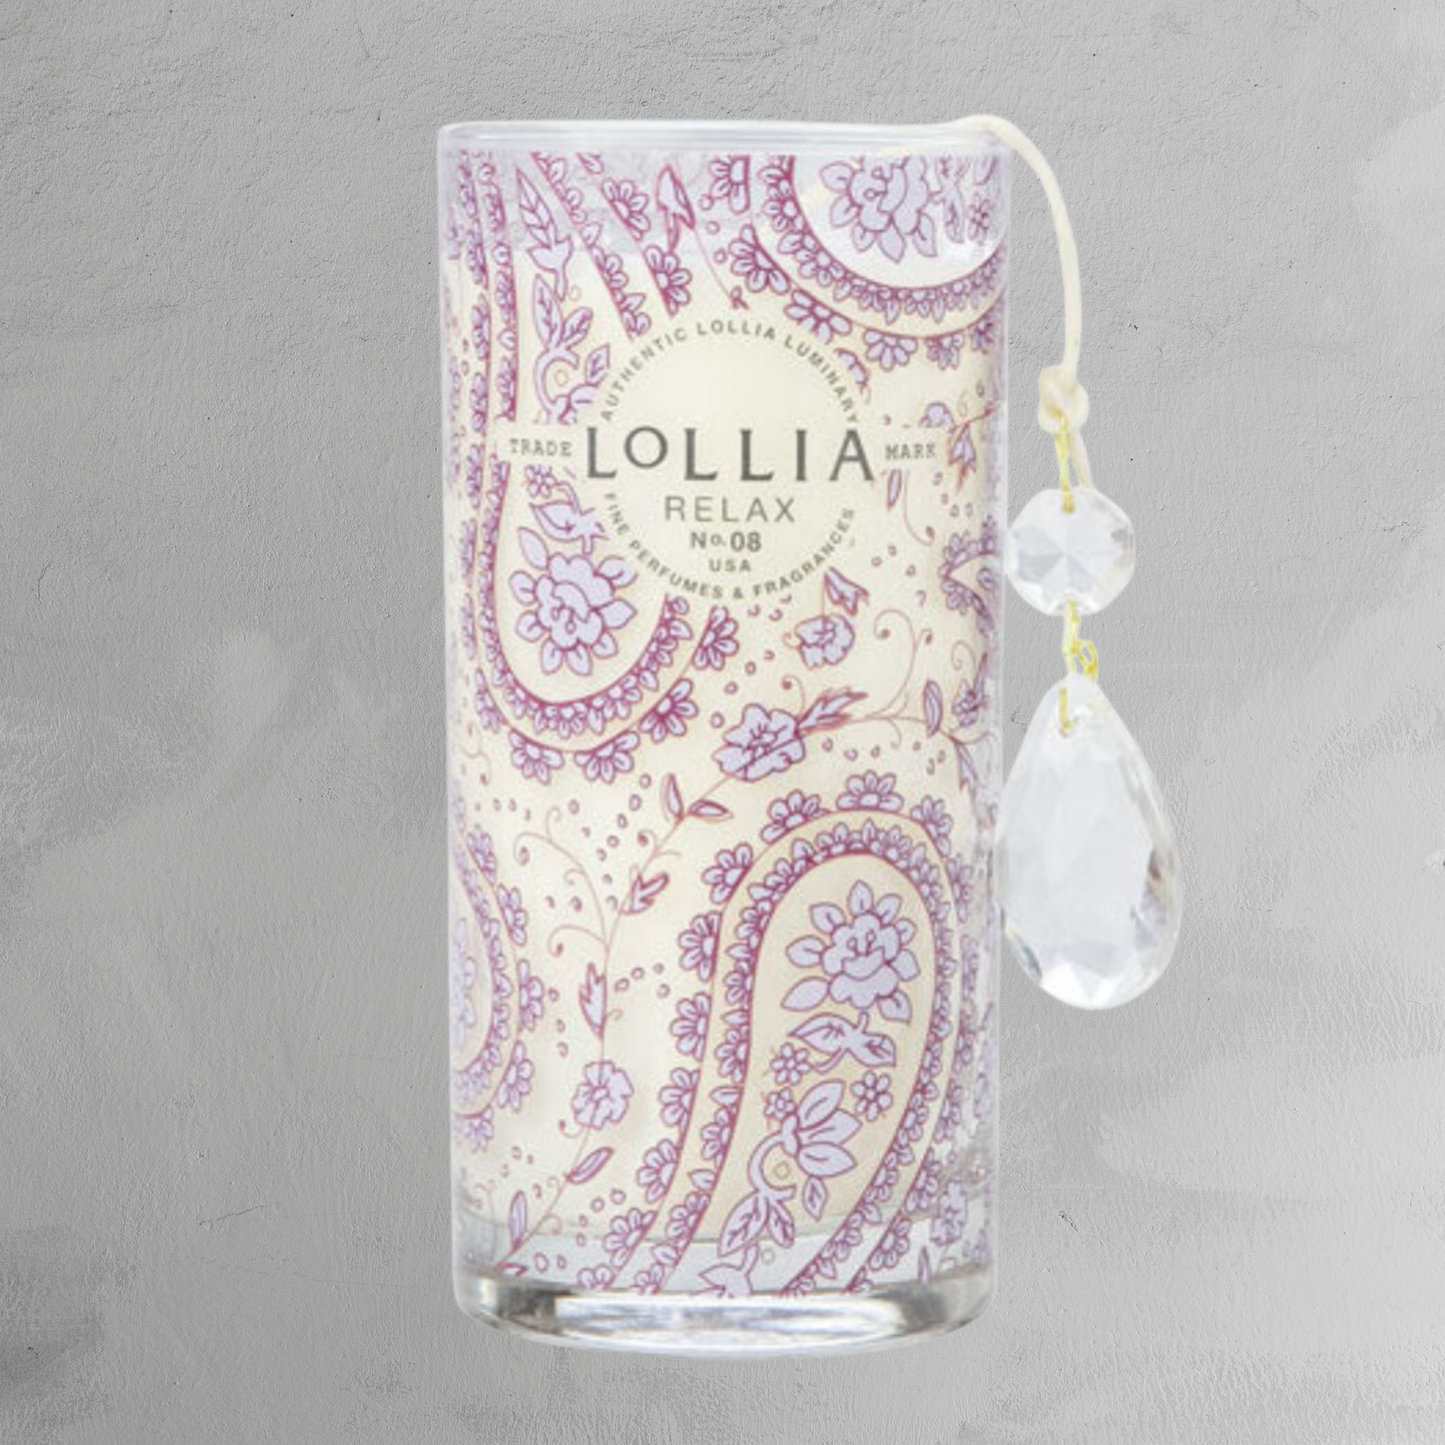 Lollia - Perfumed Luminary - Relax